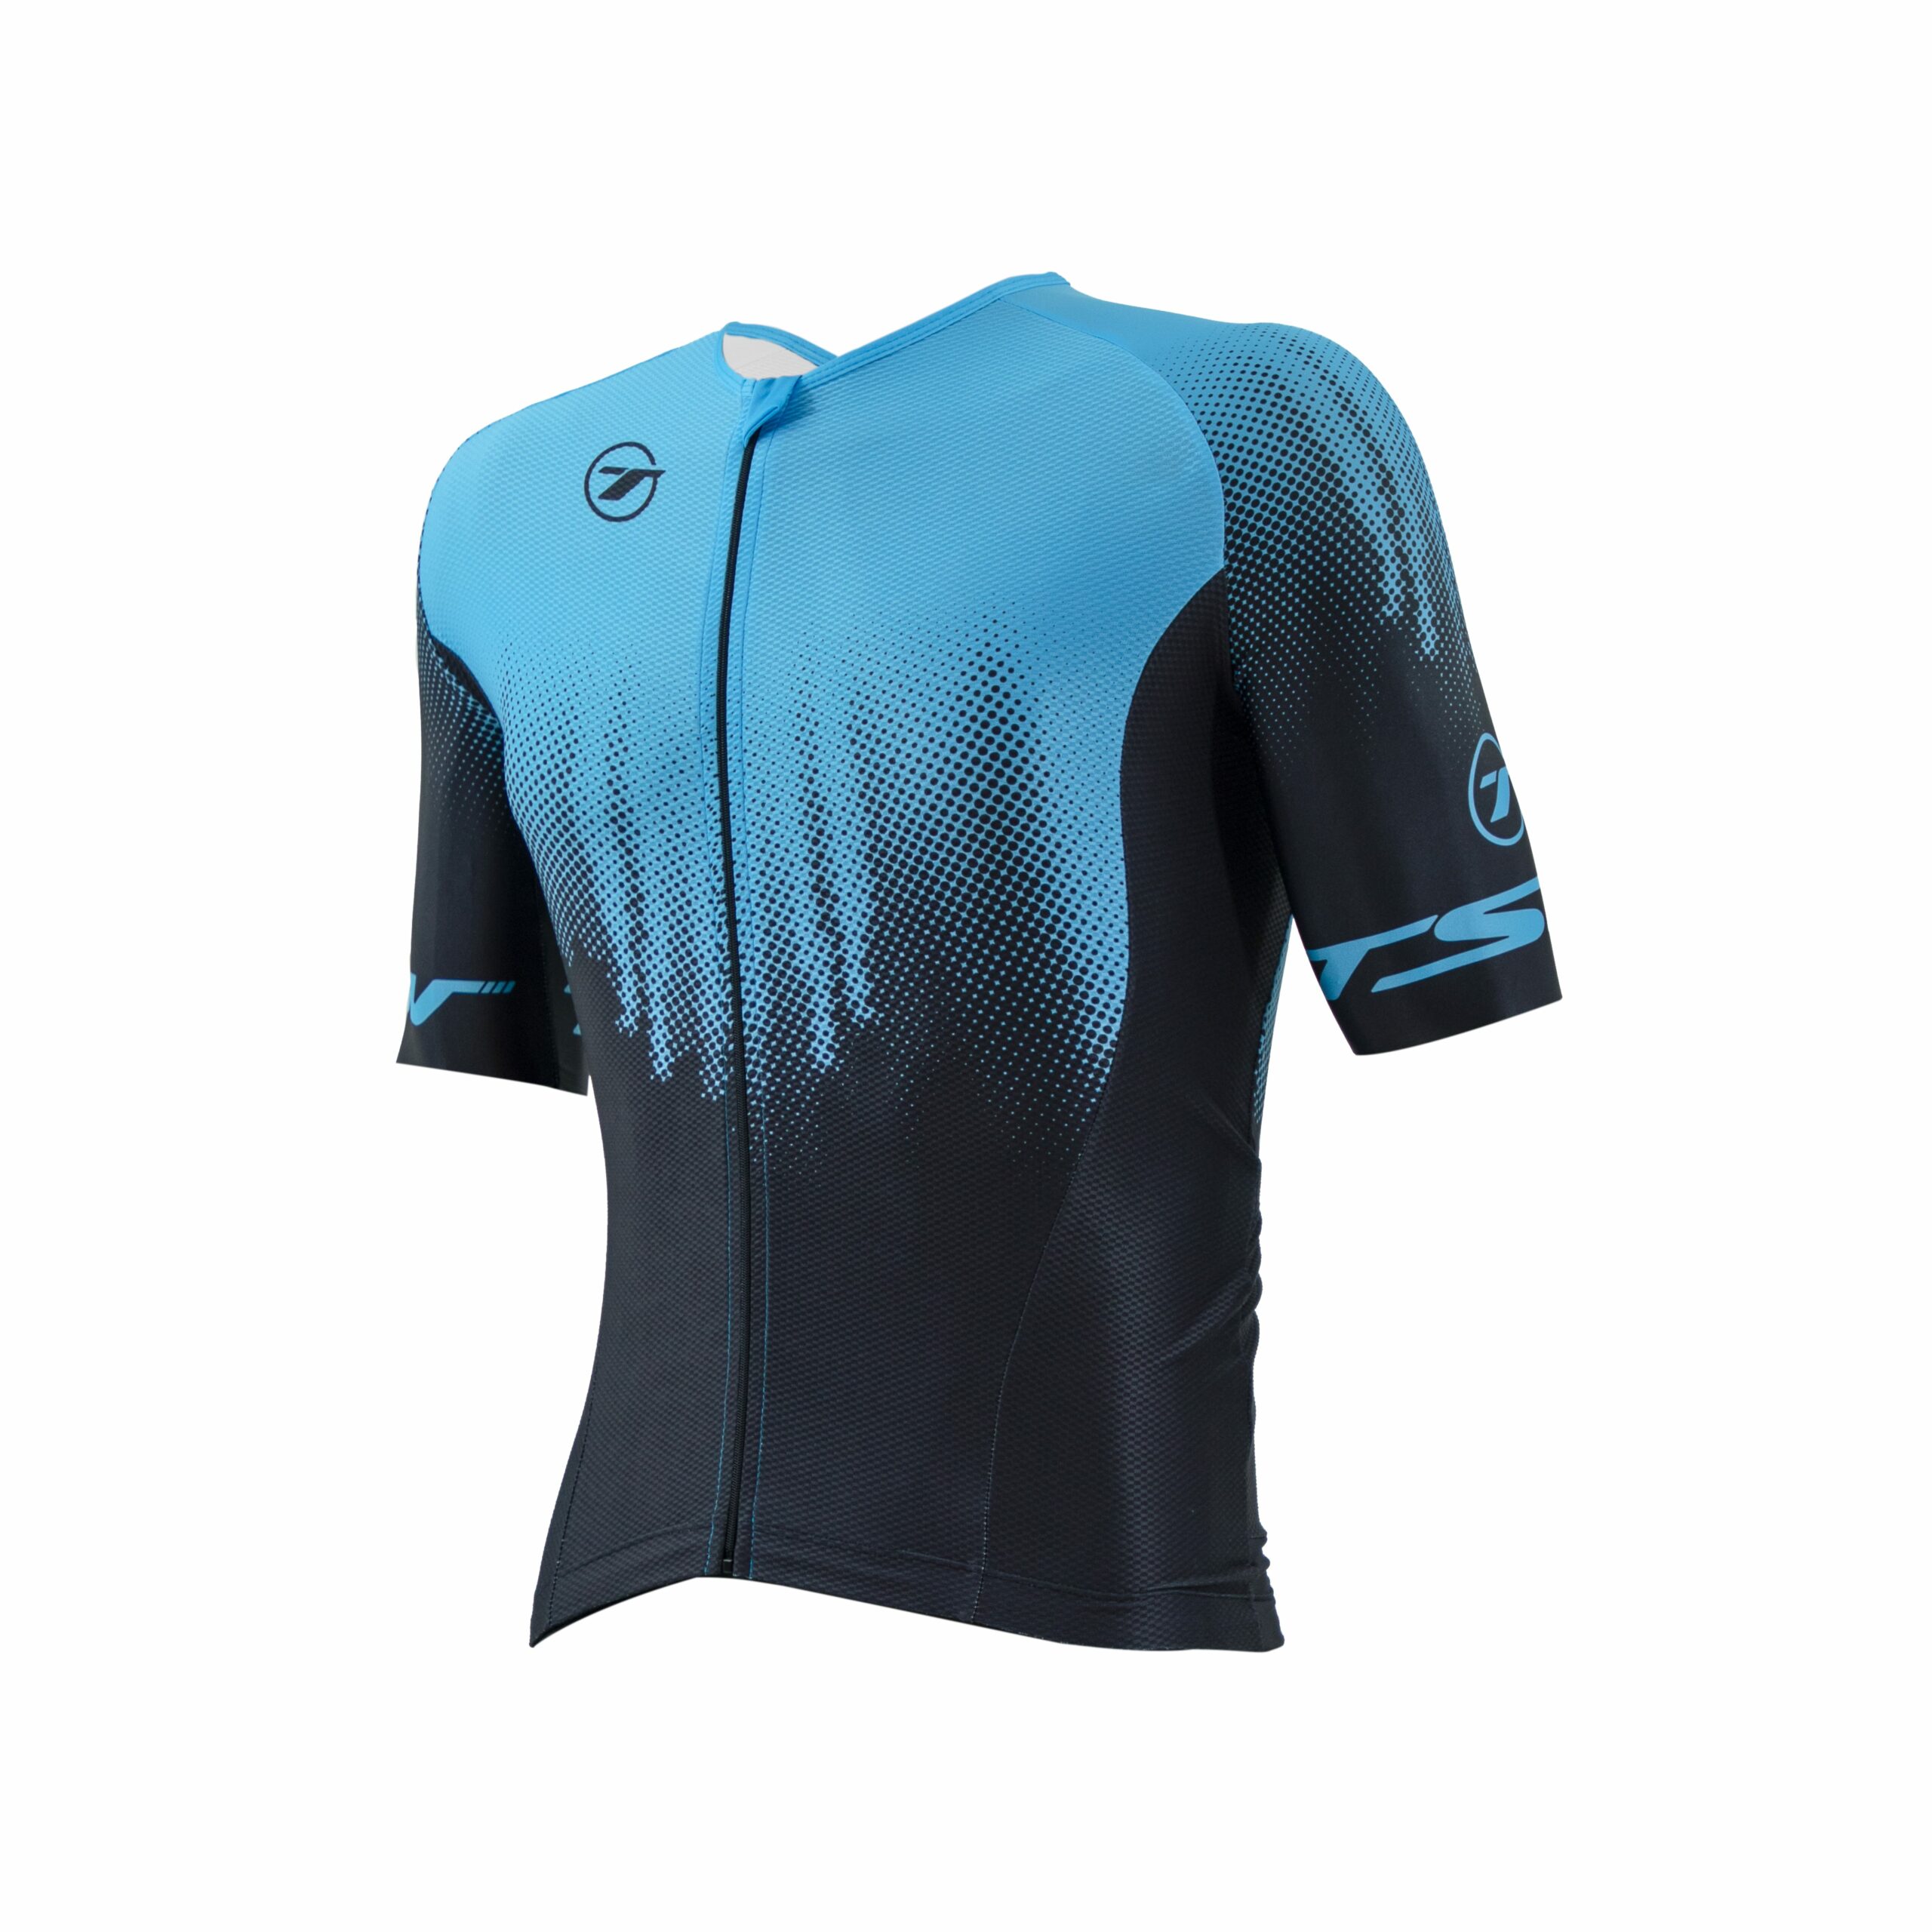 Camisa Elite Team Race - G, Azul/Preto